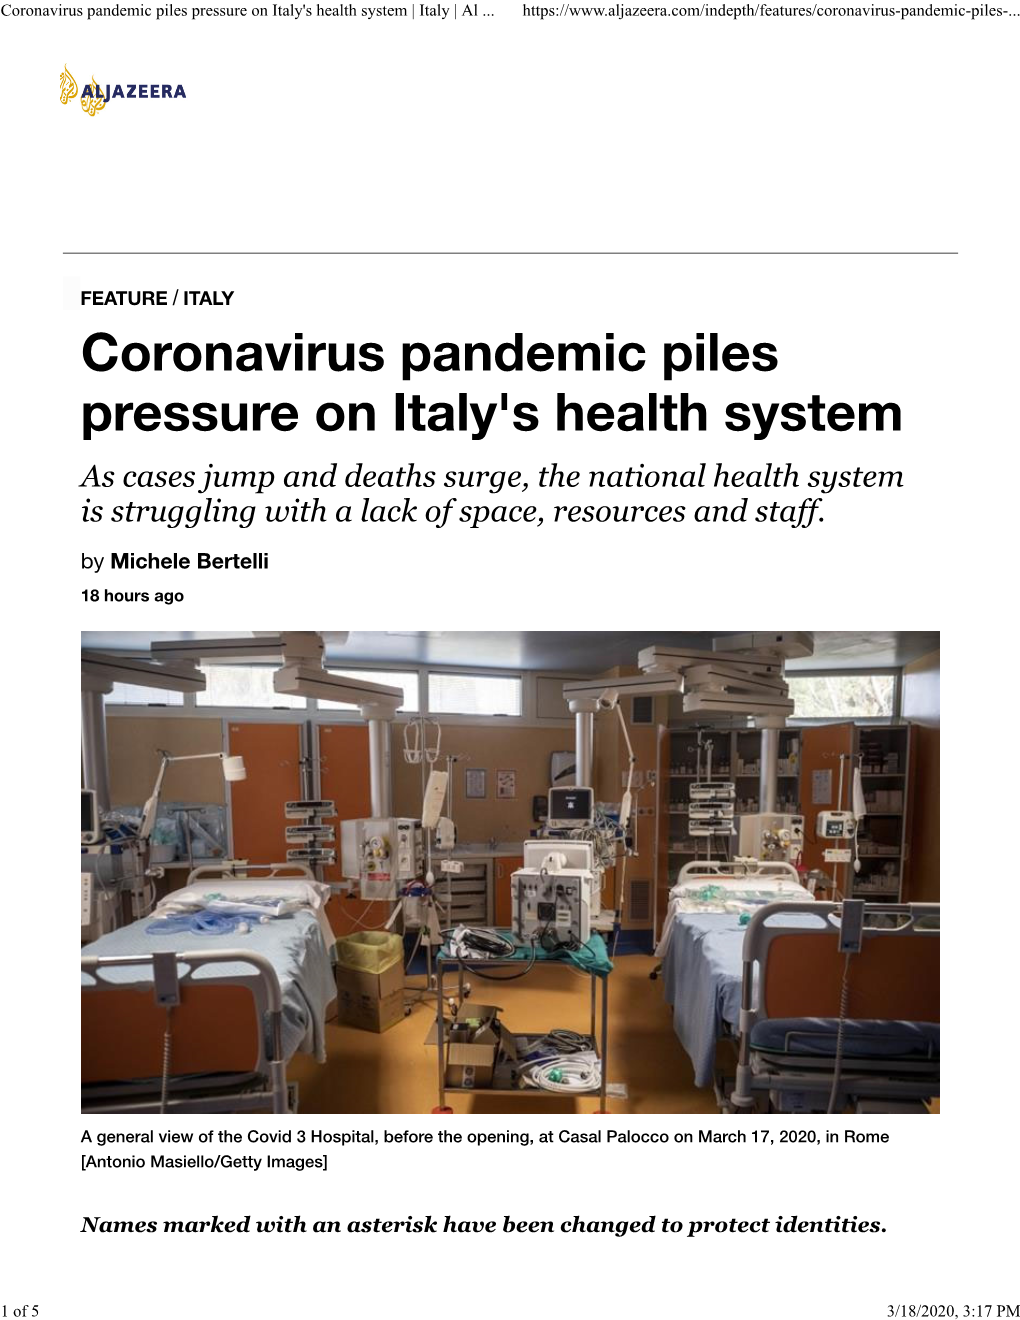 Coronavirus Pandemic Piles Pressure on Italy's Health System | Italy | Al